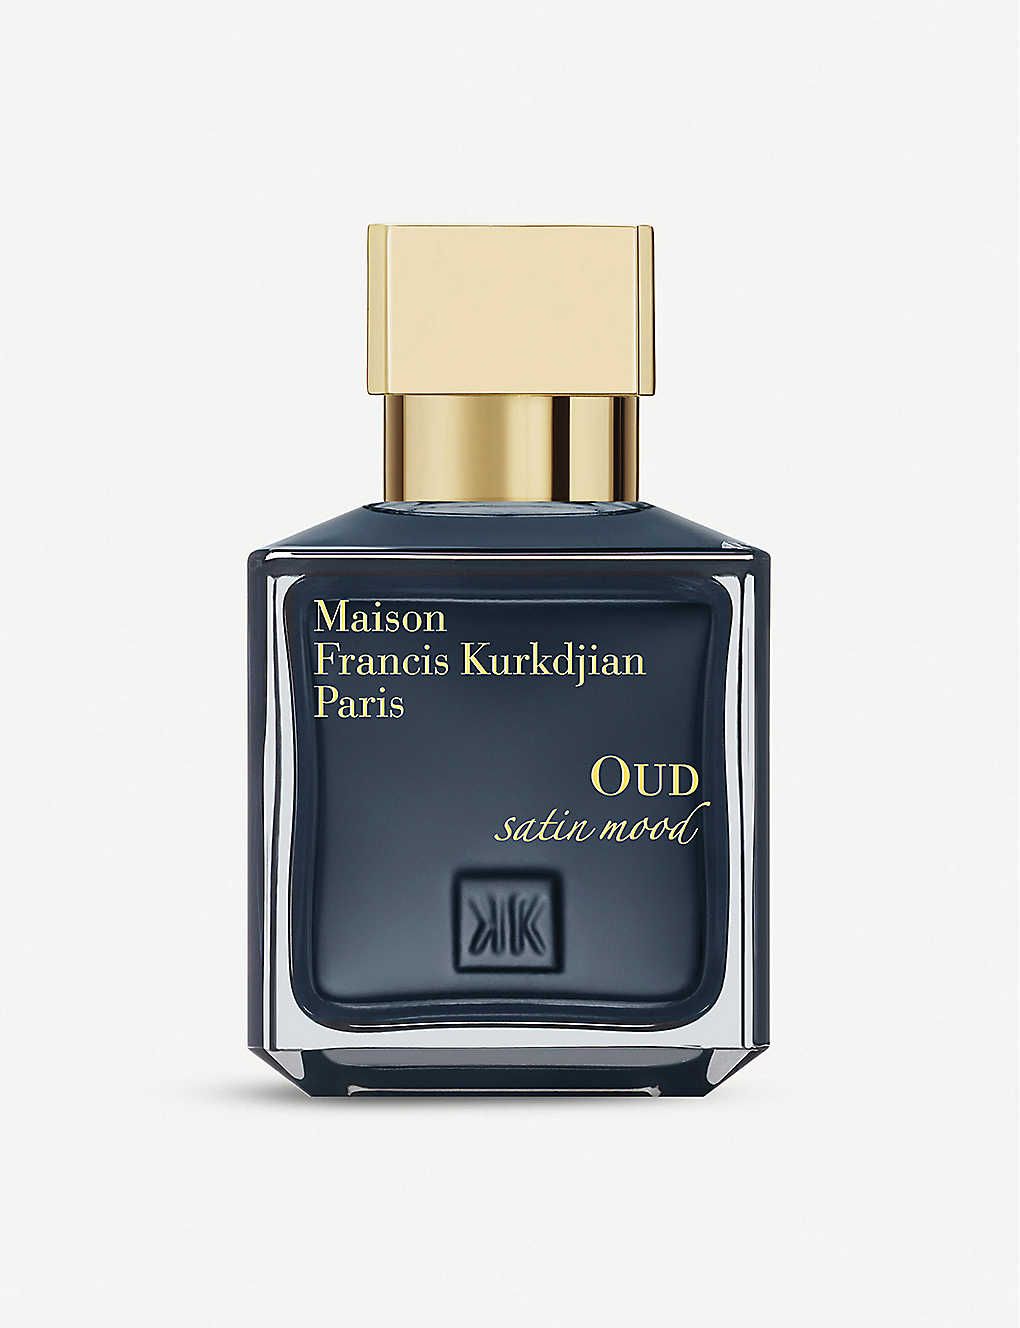 MAISON FRANCIS KURKDJIAN Oud Satin Mood eau de parfum 70ml | Selfridges